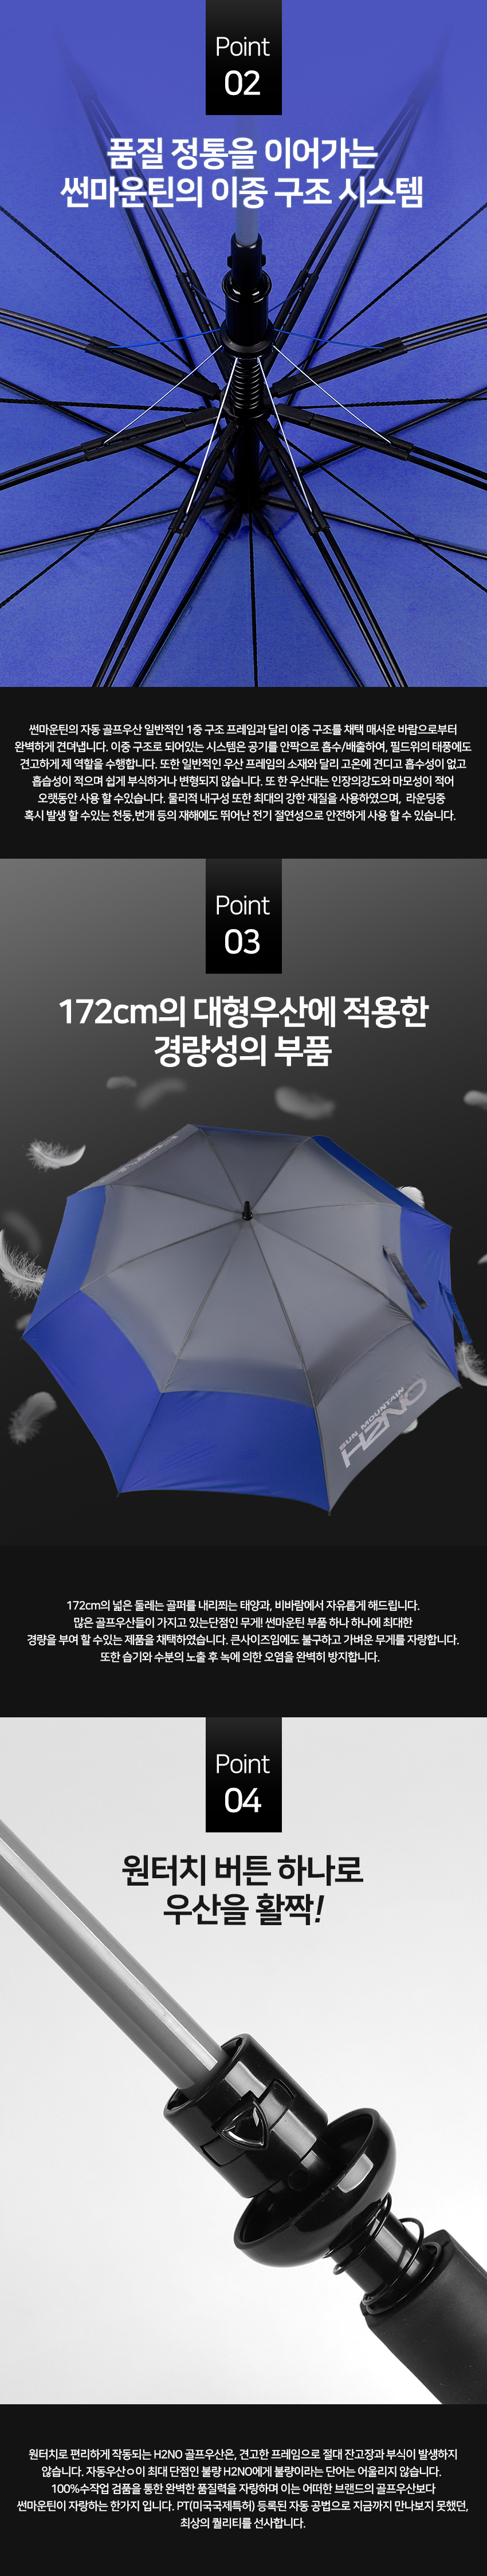 sunmountail_autoopen_double_canopy_umbrella_detail_04.jpg